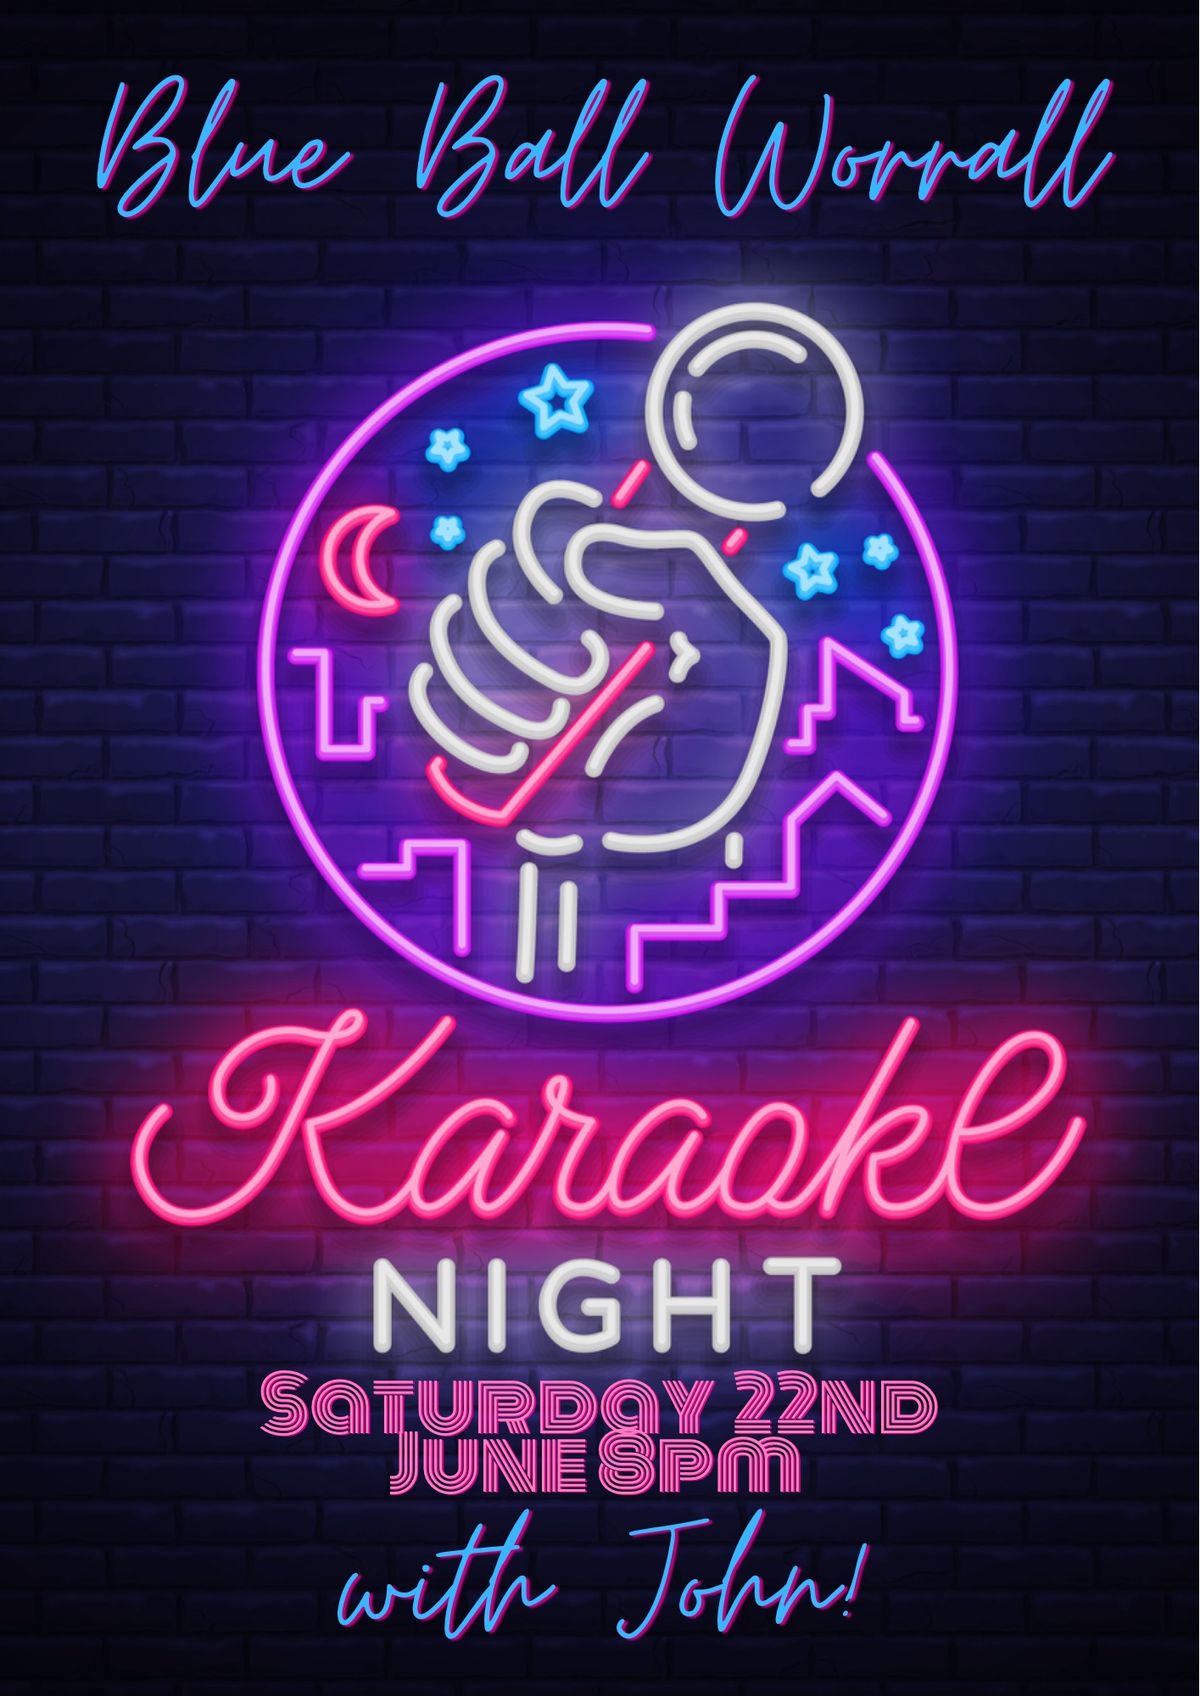 Karaoke Night at the Ball Worrall